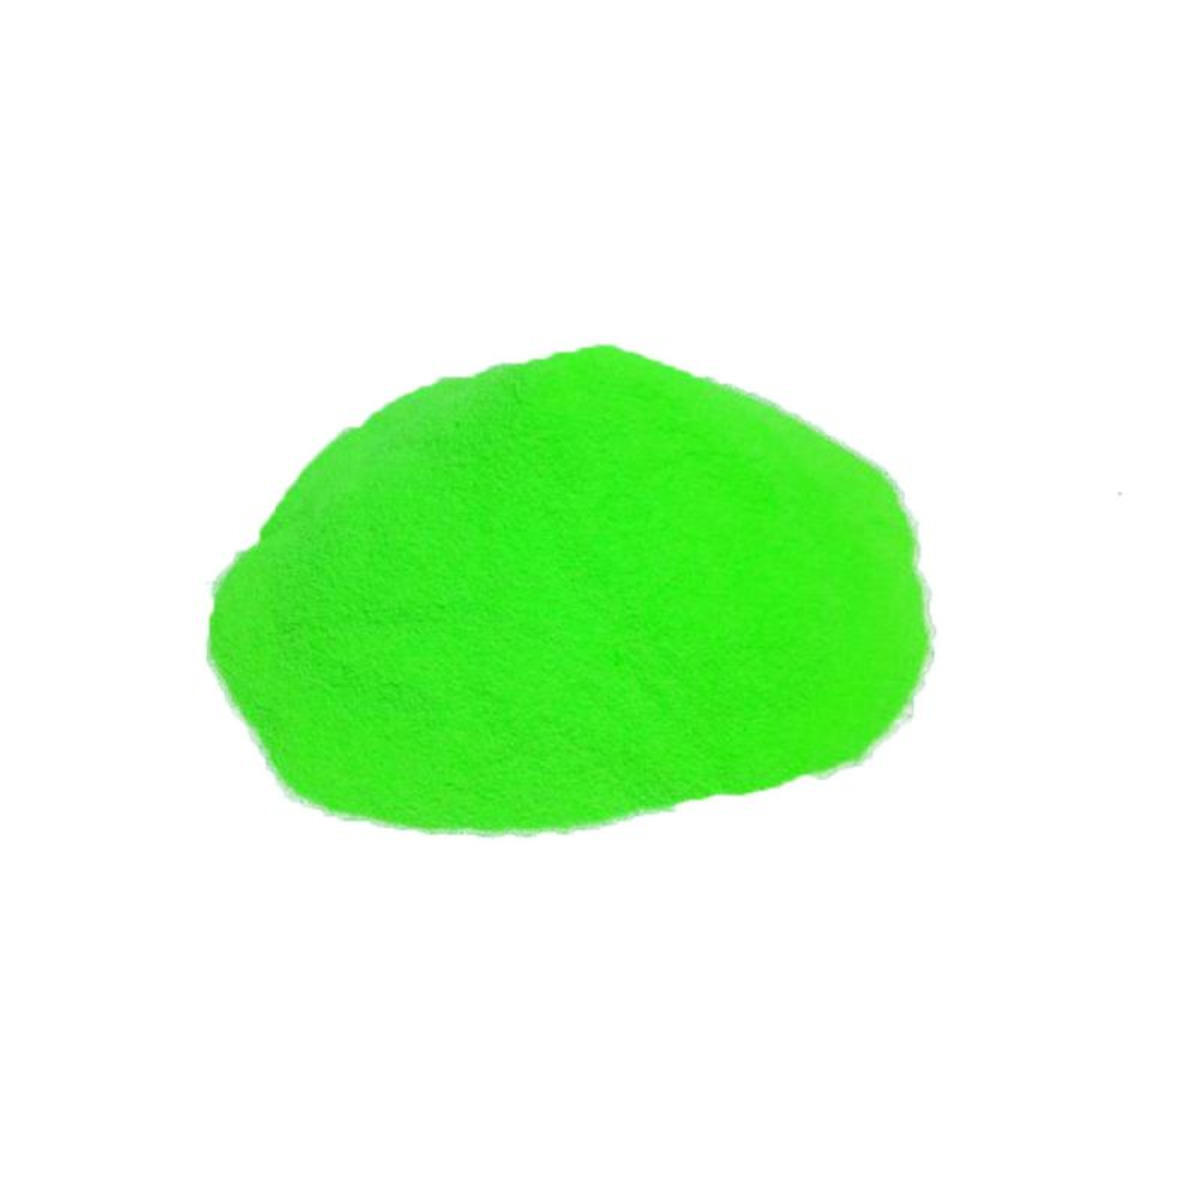 M2 Fishing Plastgum Powder Plasticizer For Ballast -  Phosphorescent Green - 100 g        